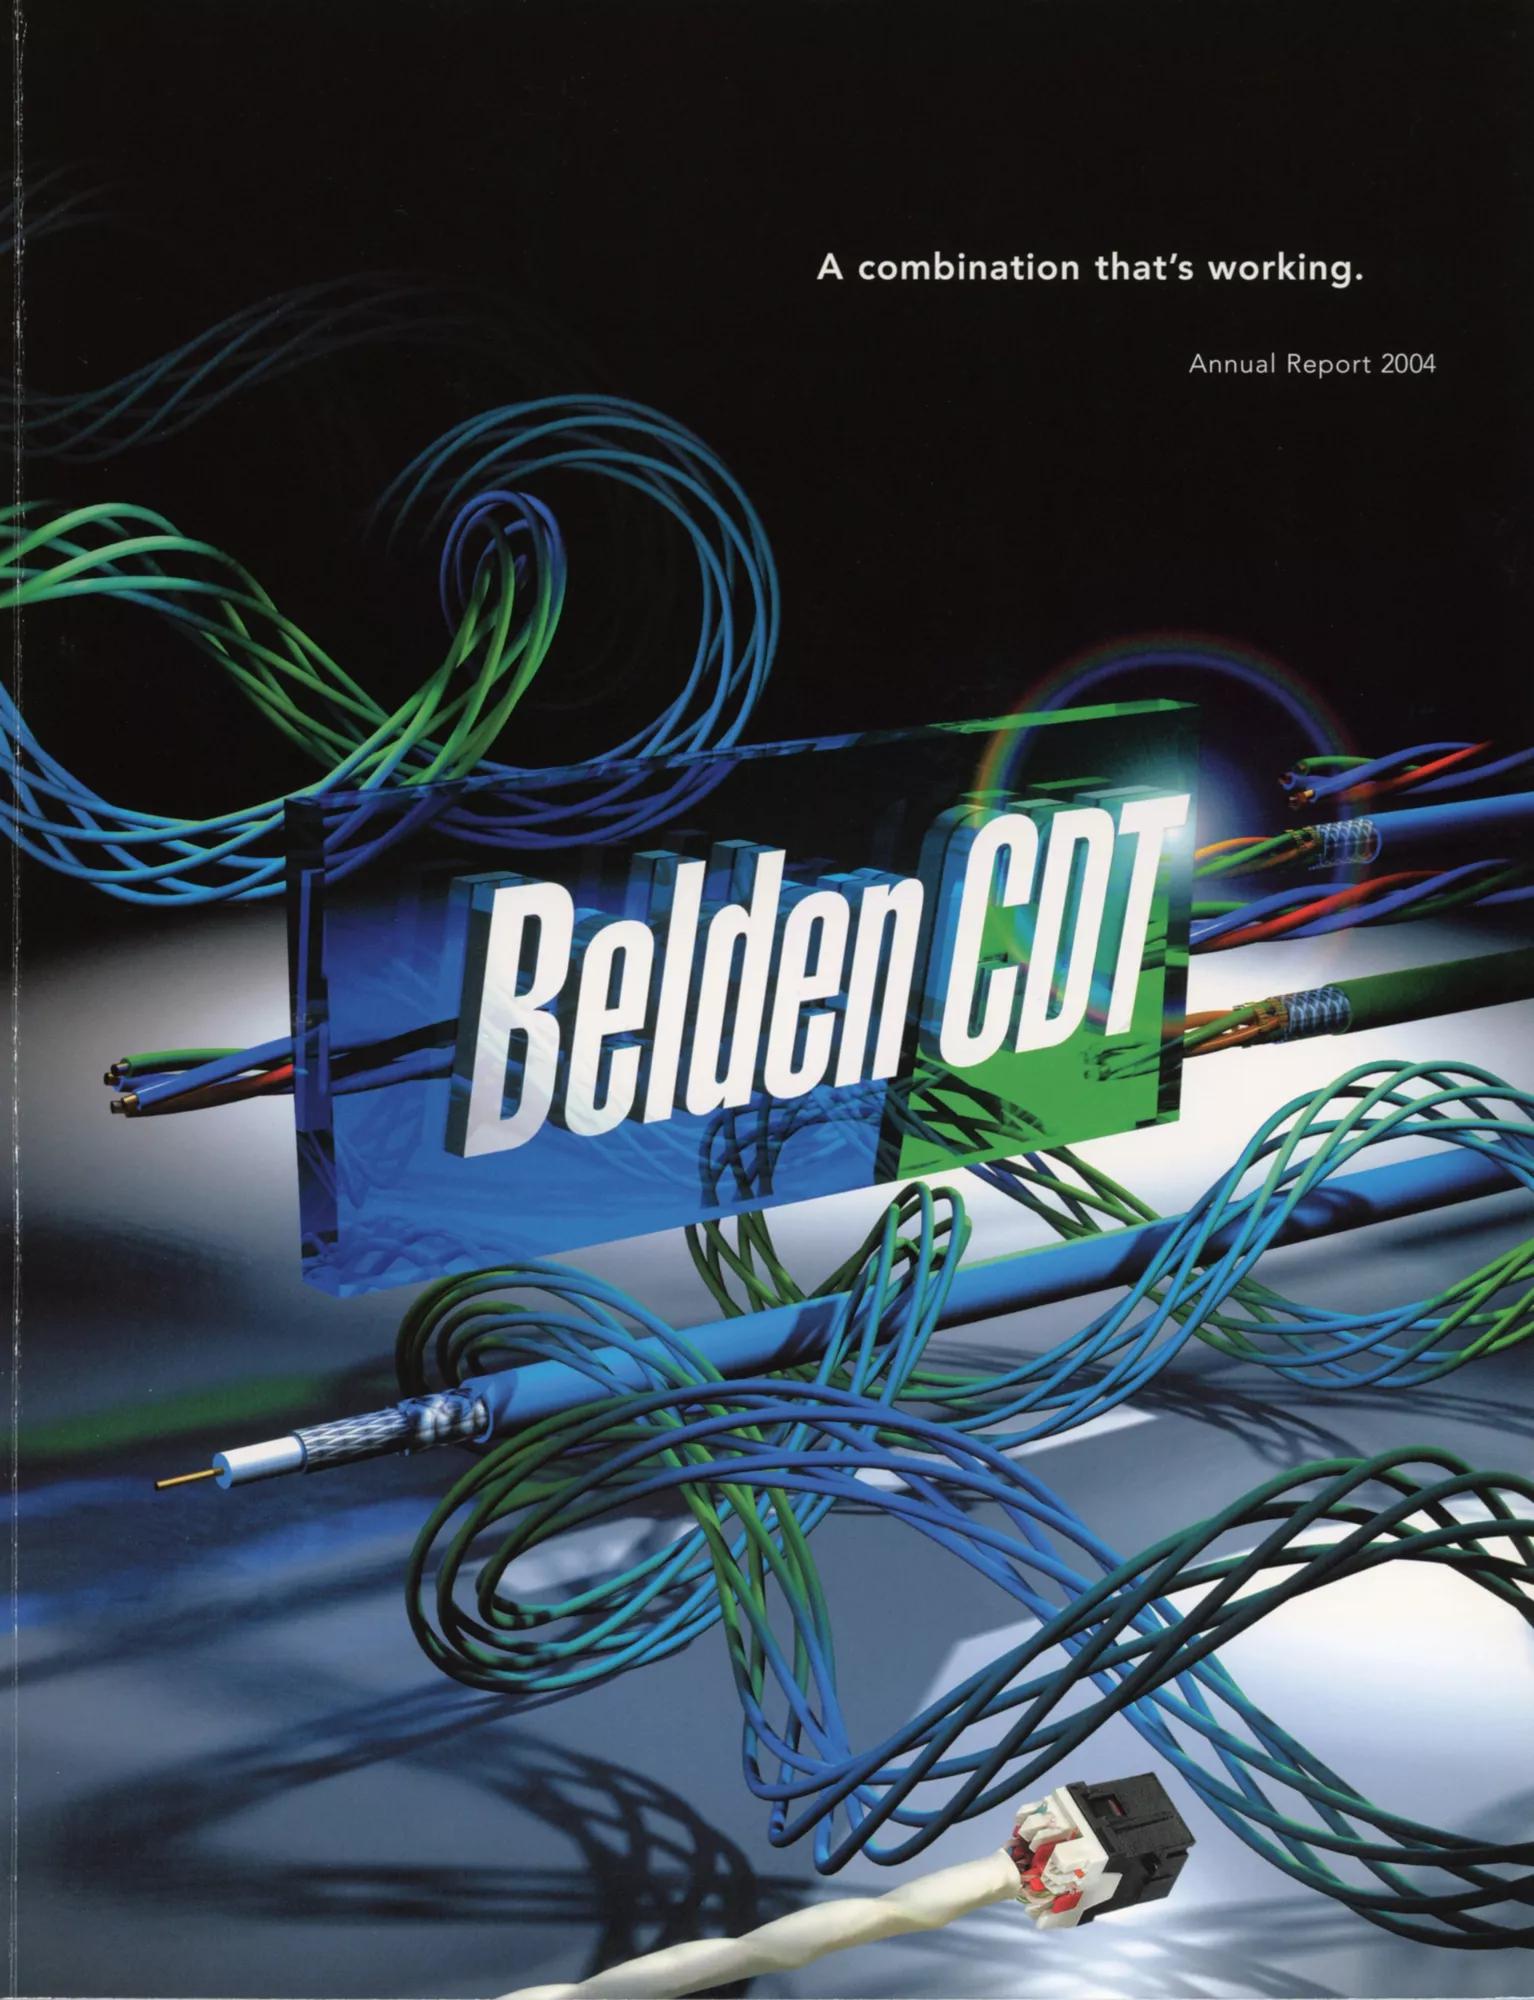 Belden CBT annual report cover